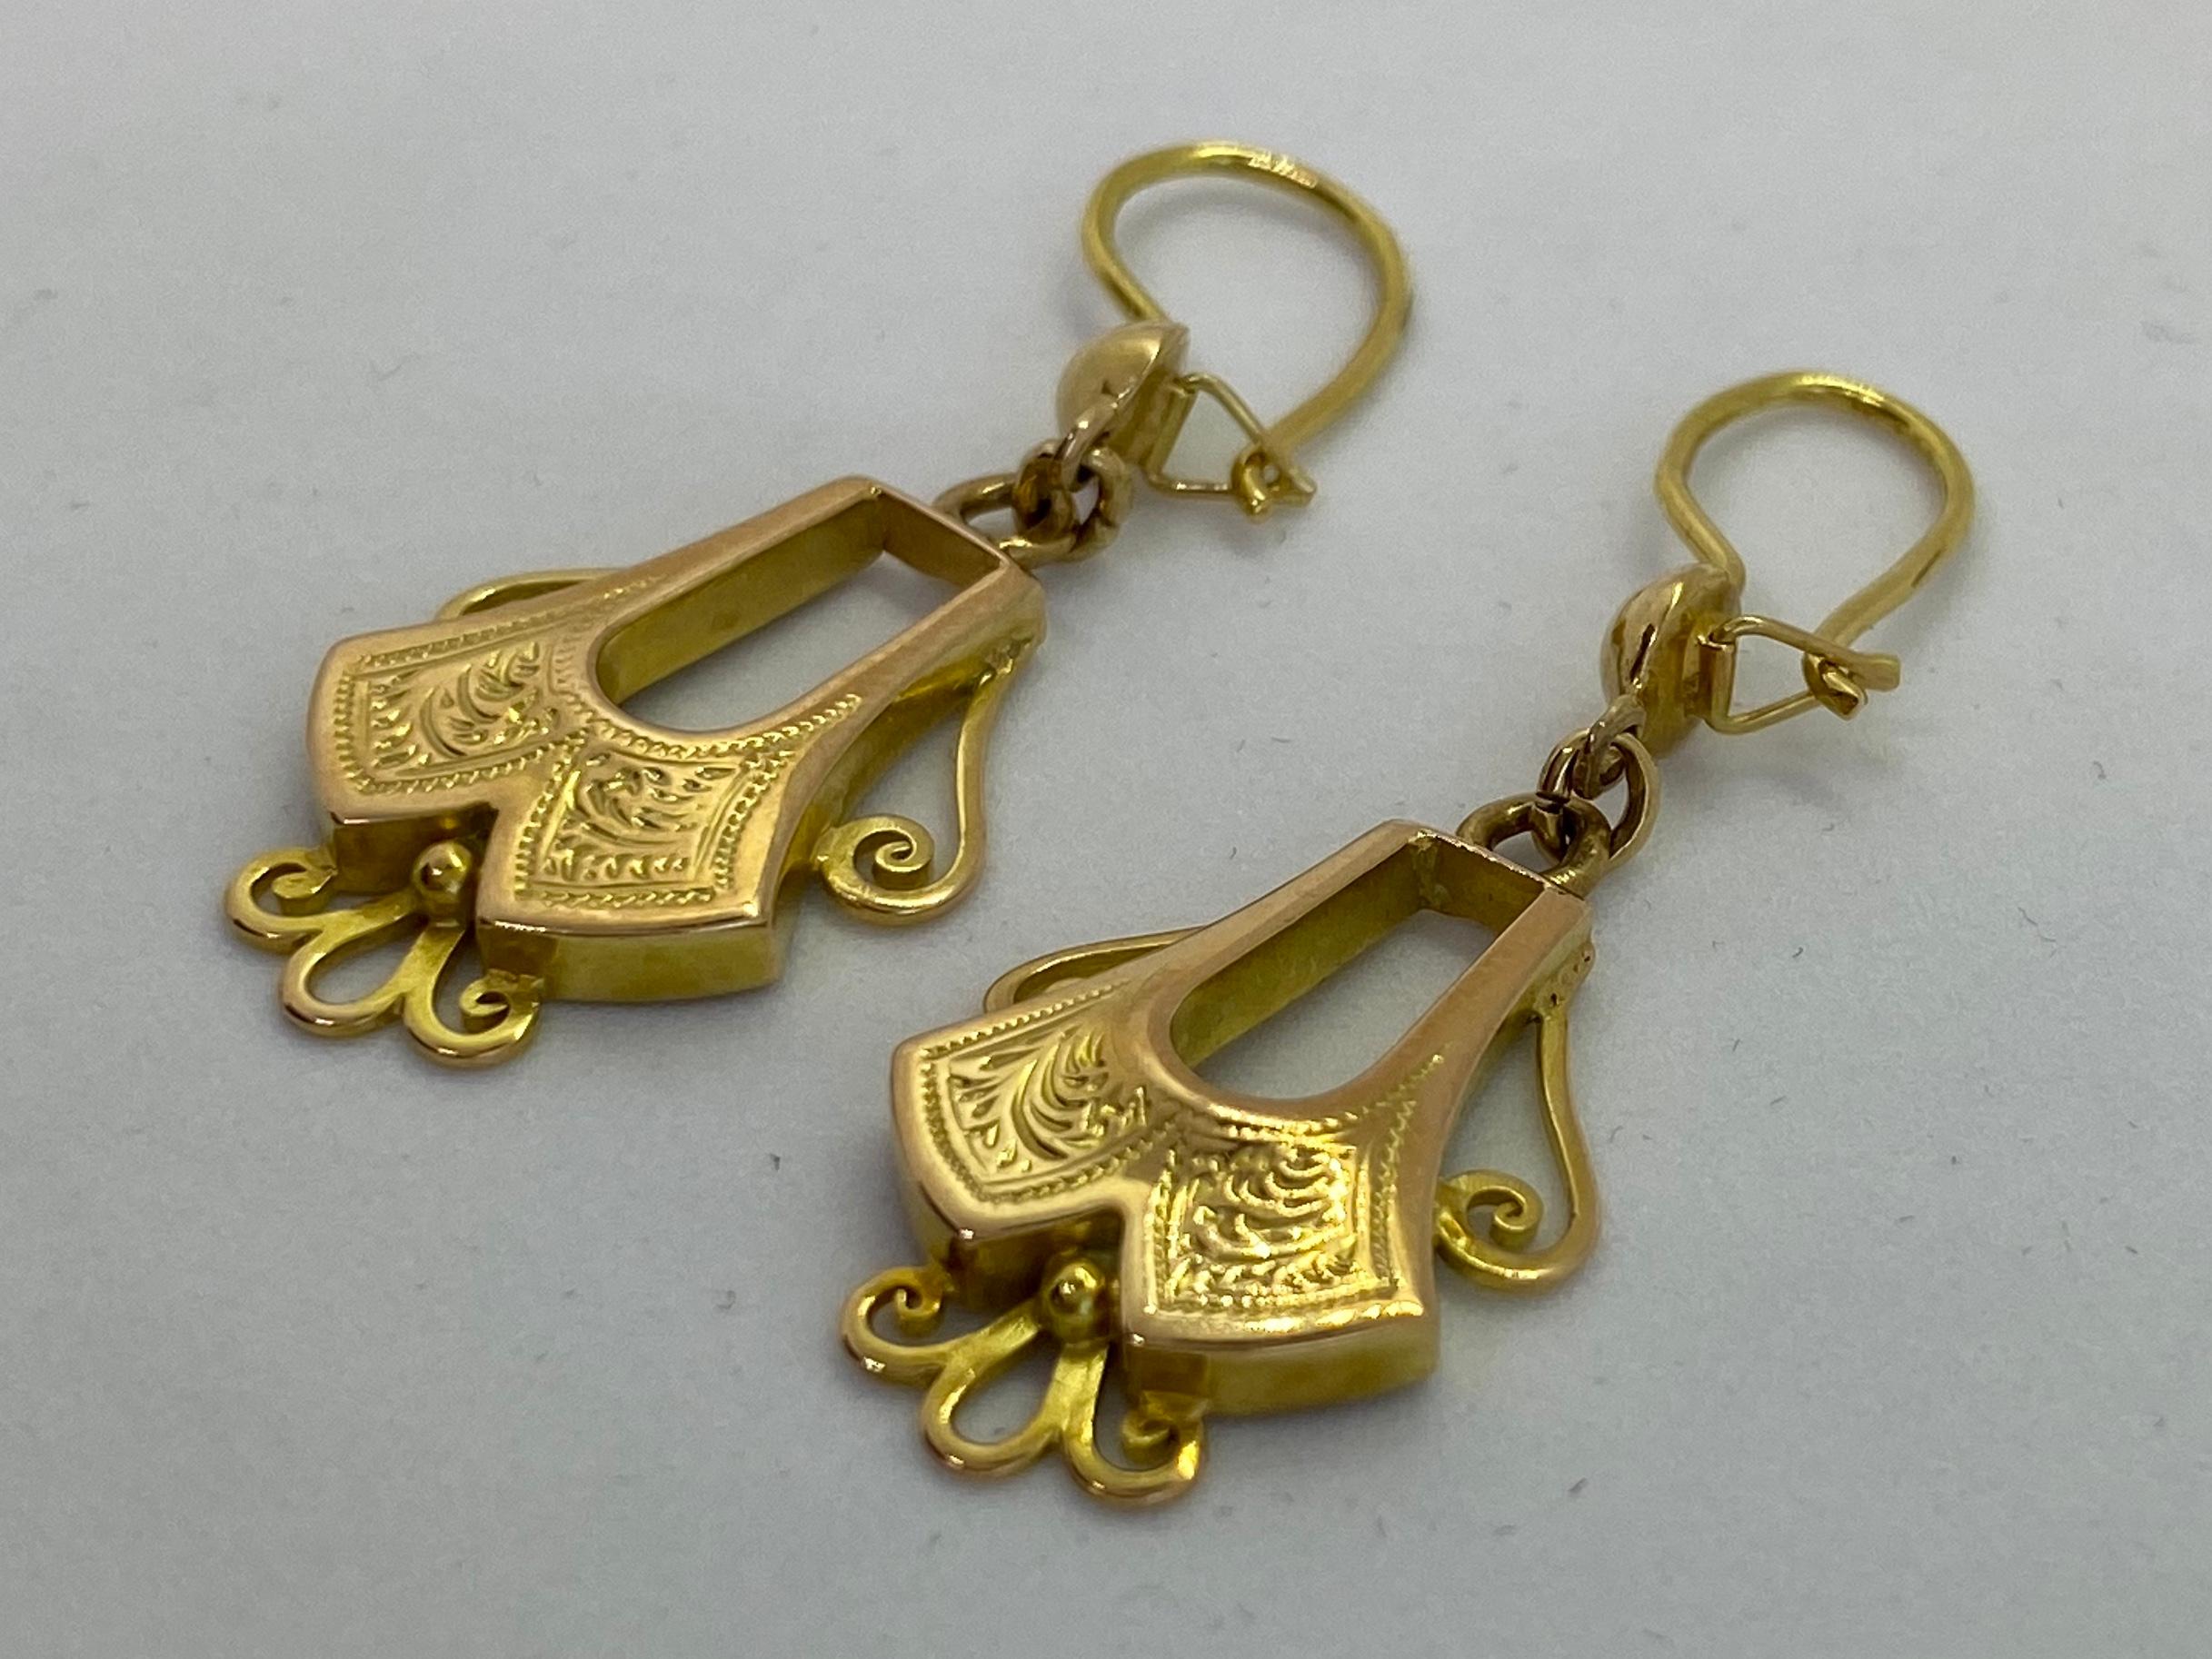 14 Carat Yellow Gold Saint Petersburg Engraving Decoration Drop Earrings
14k, Russian Gold stamp 56
Width 1.65cm, Length 4.4cm, Depth 0.4cm